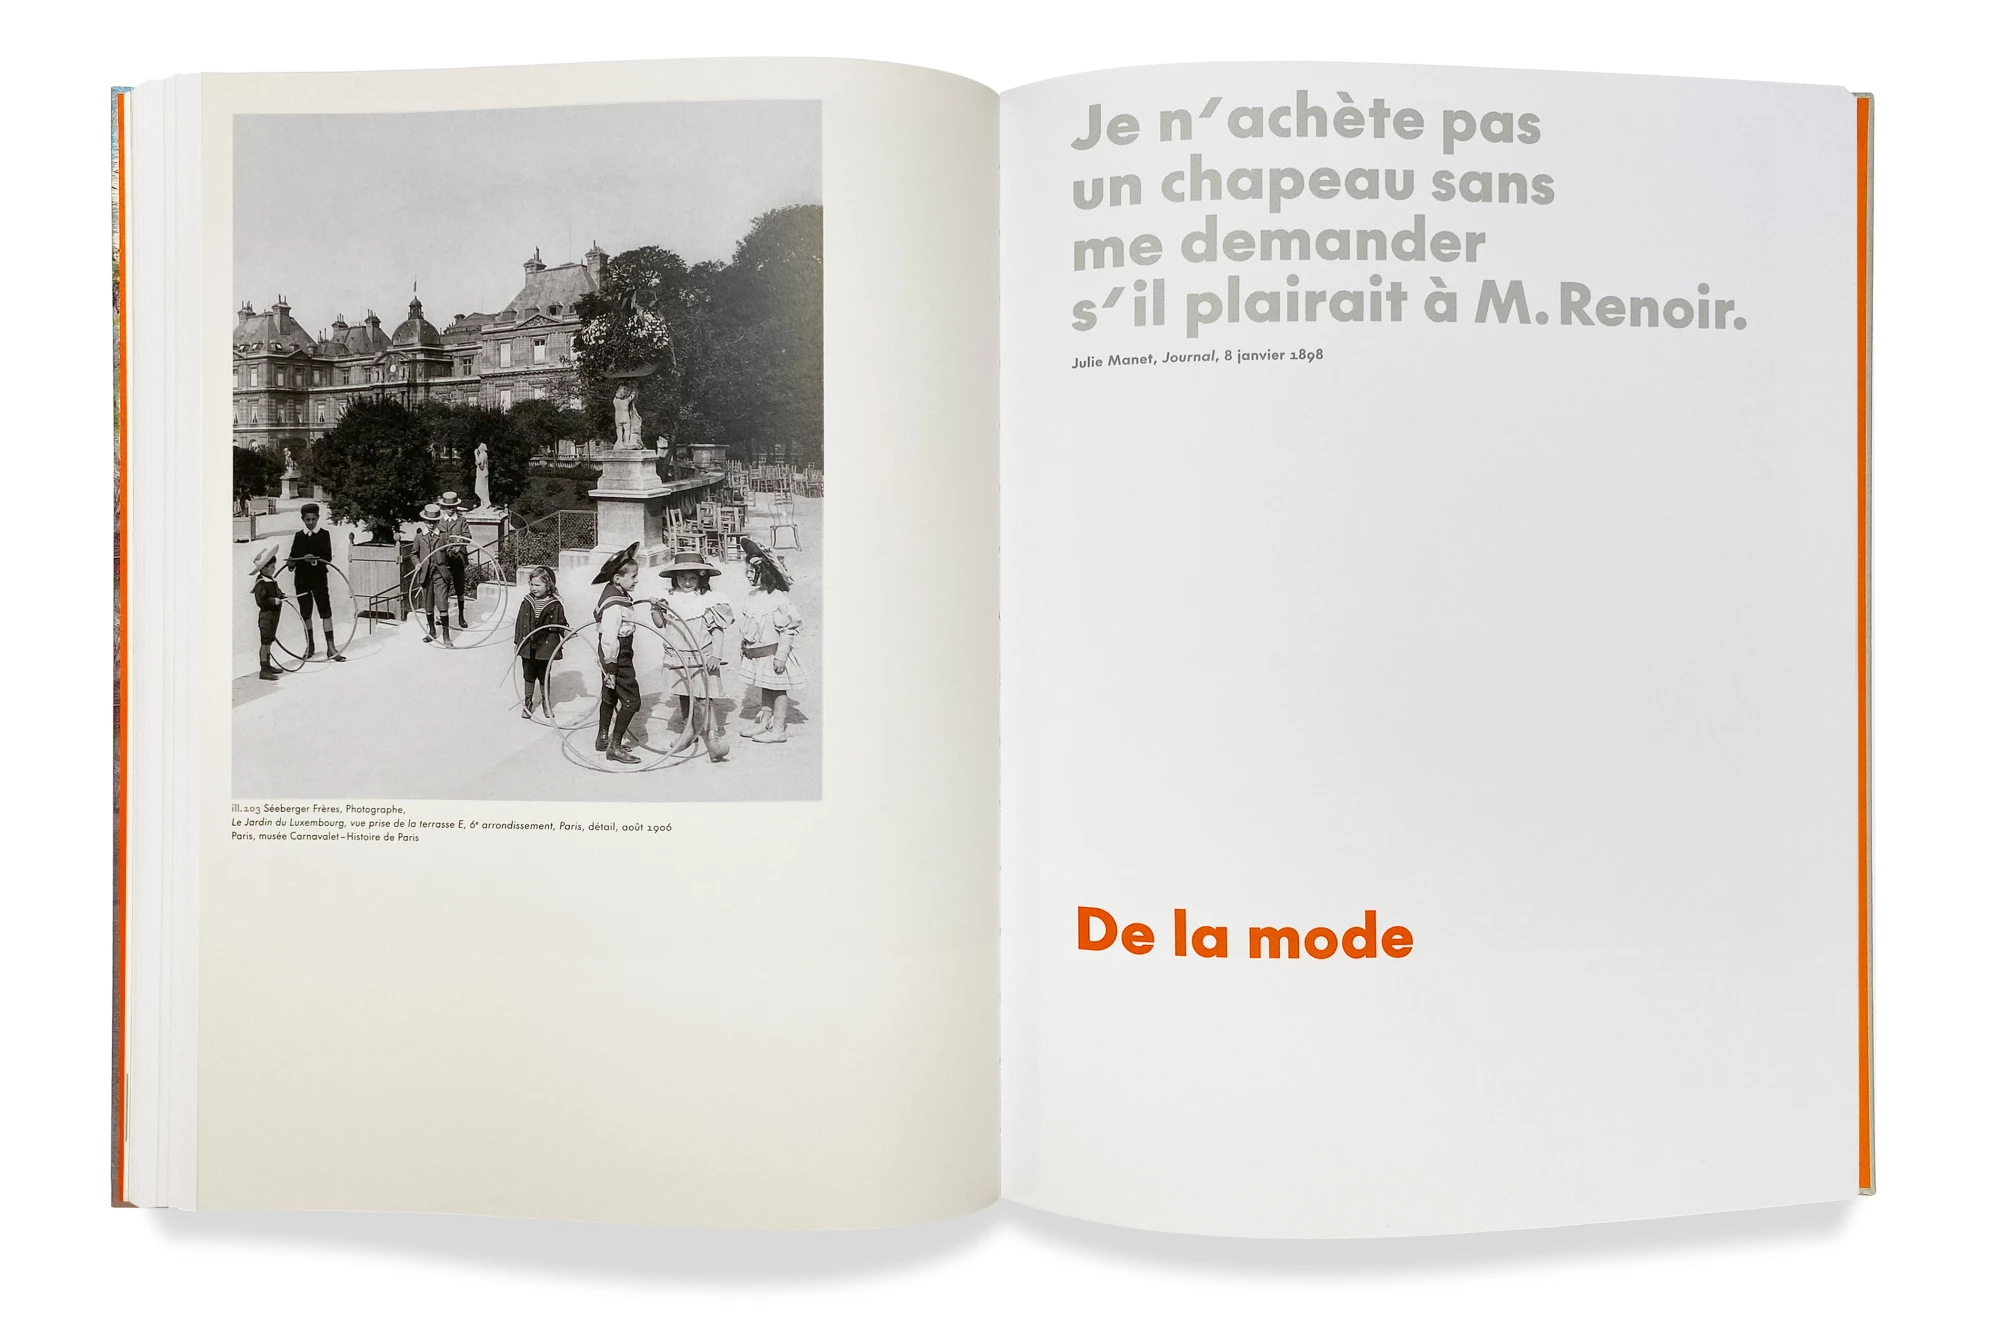 Léo Grunstein - Children of the Impressionism, Musée des Impressionnismes Giverny, Flammarion, Publication, 2023